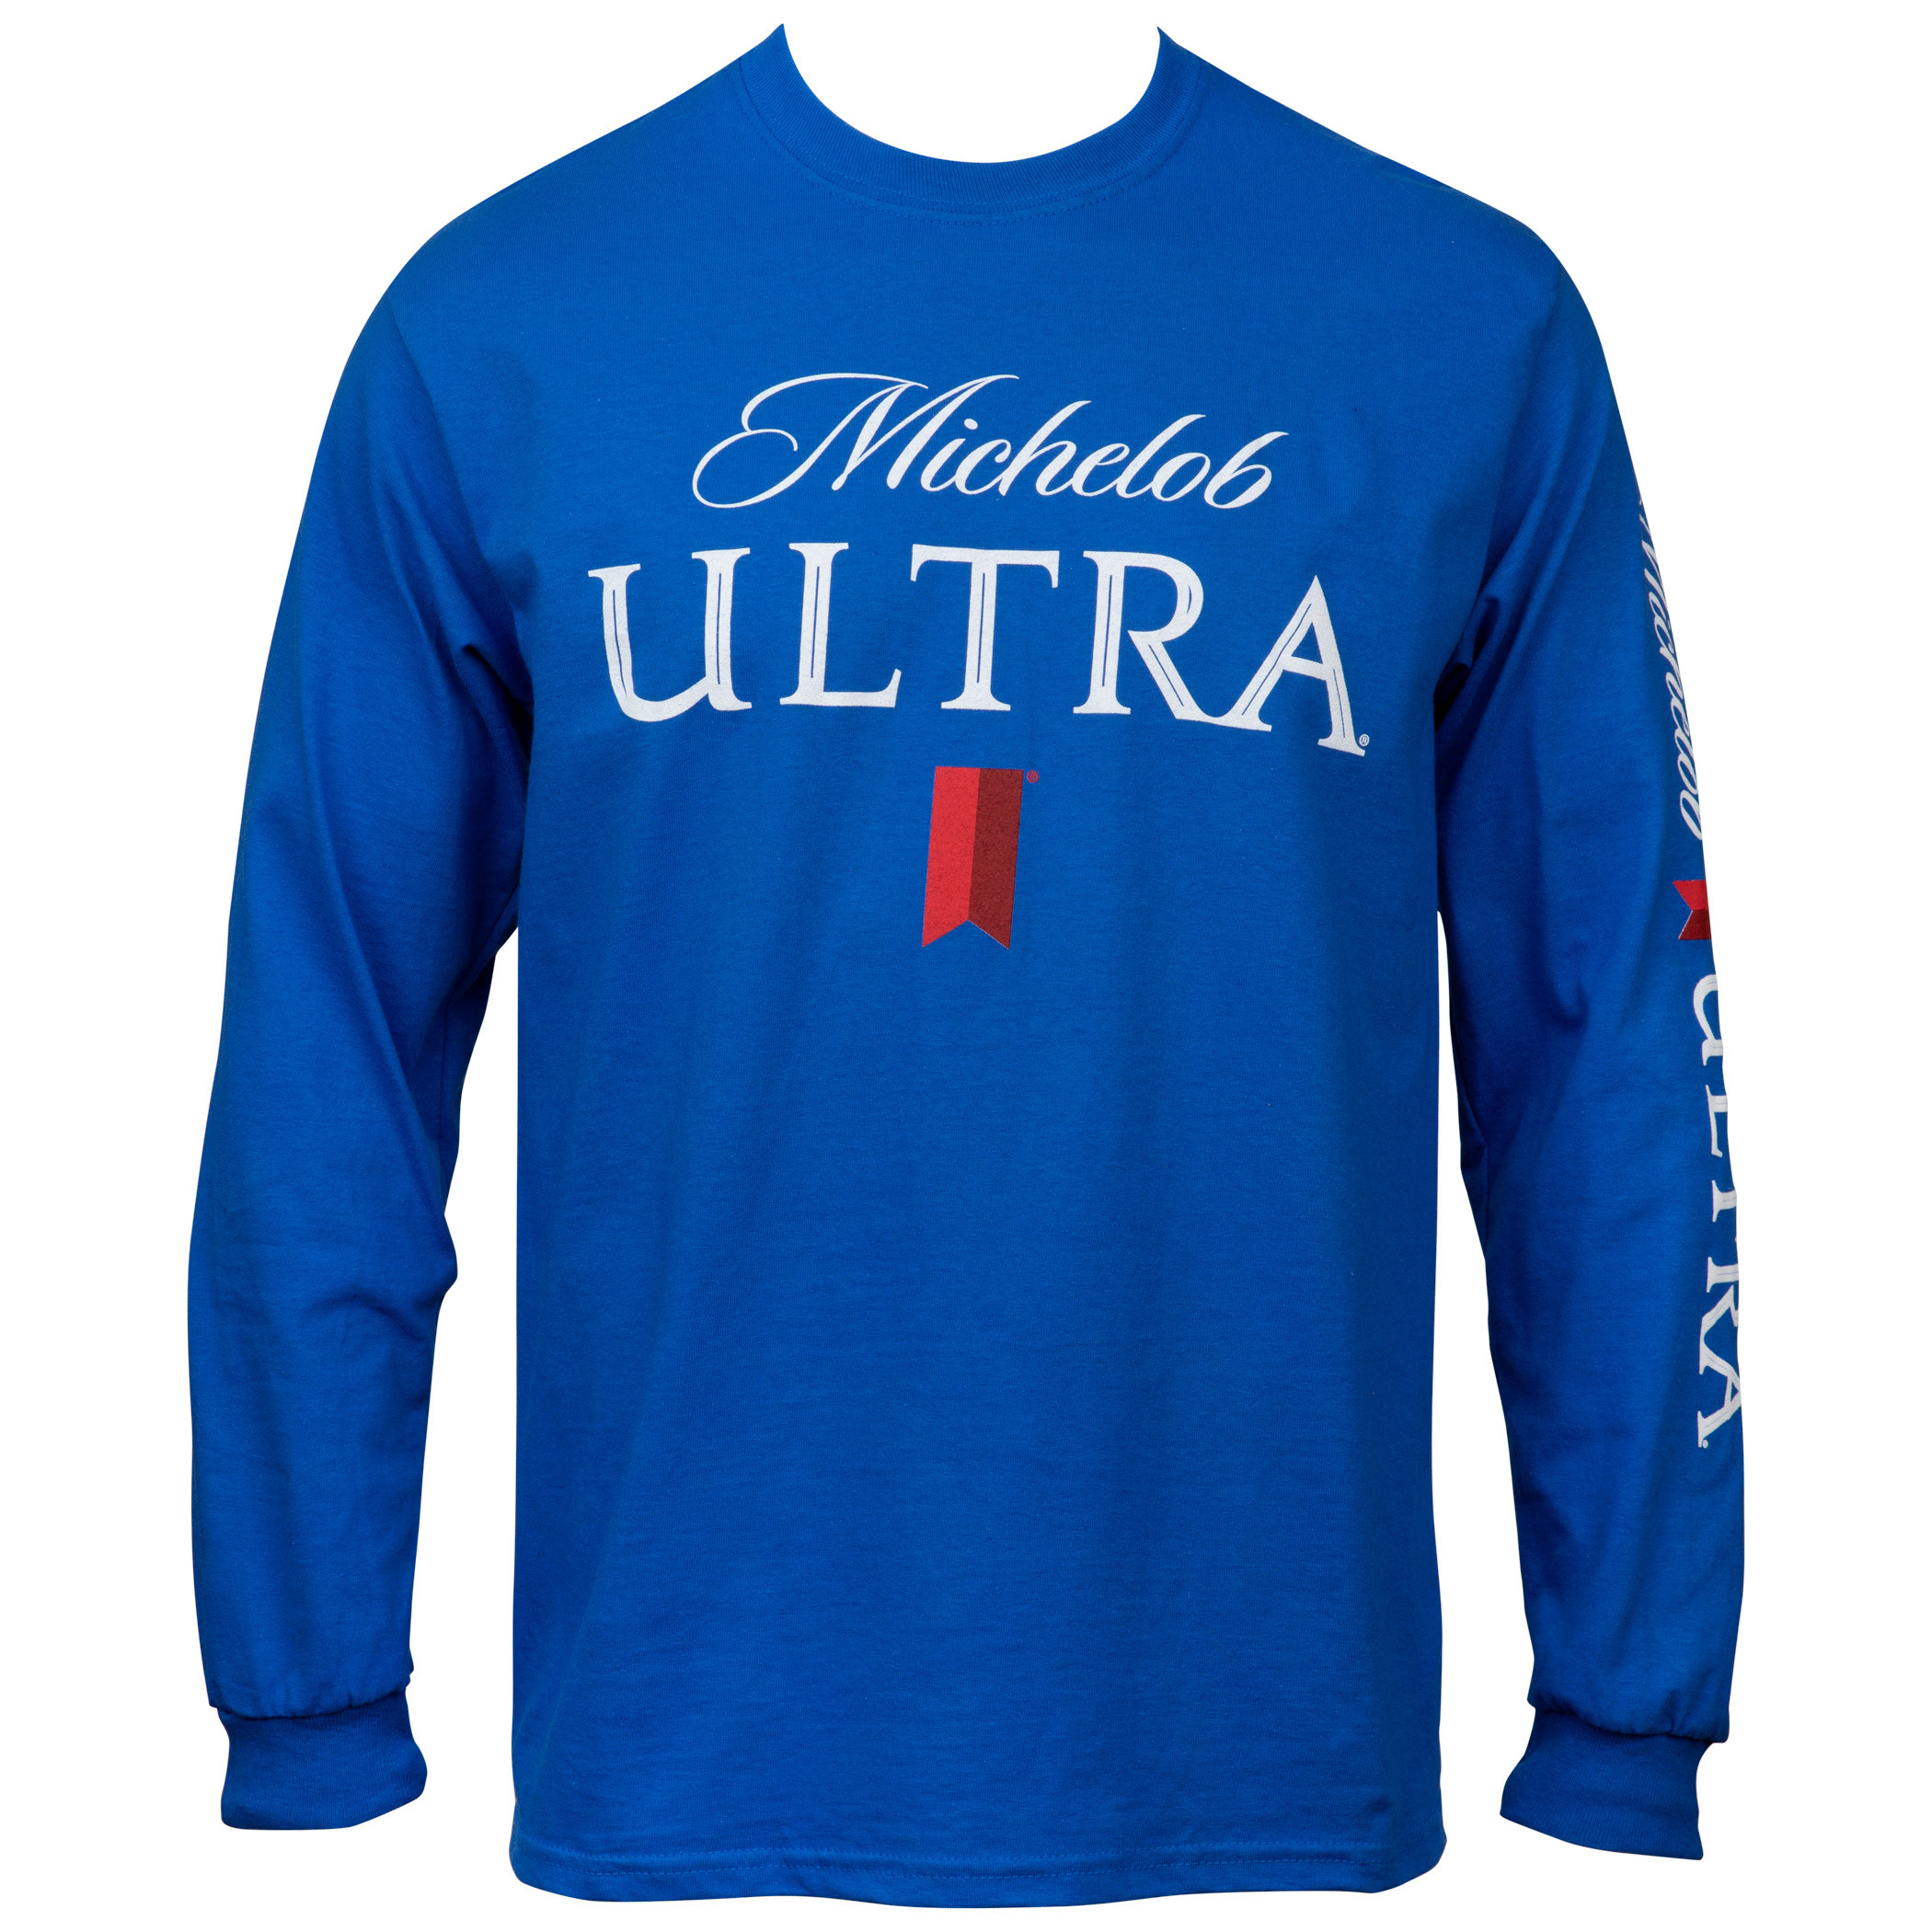 Michelob Ultra Sleeve Print Long Sleeve Shirt